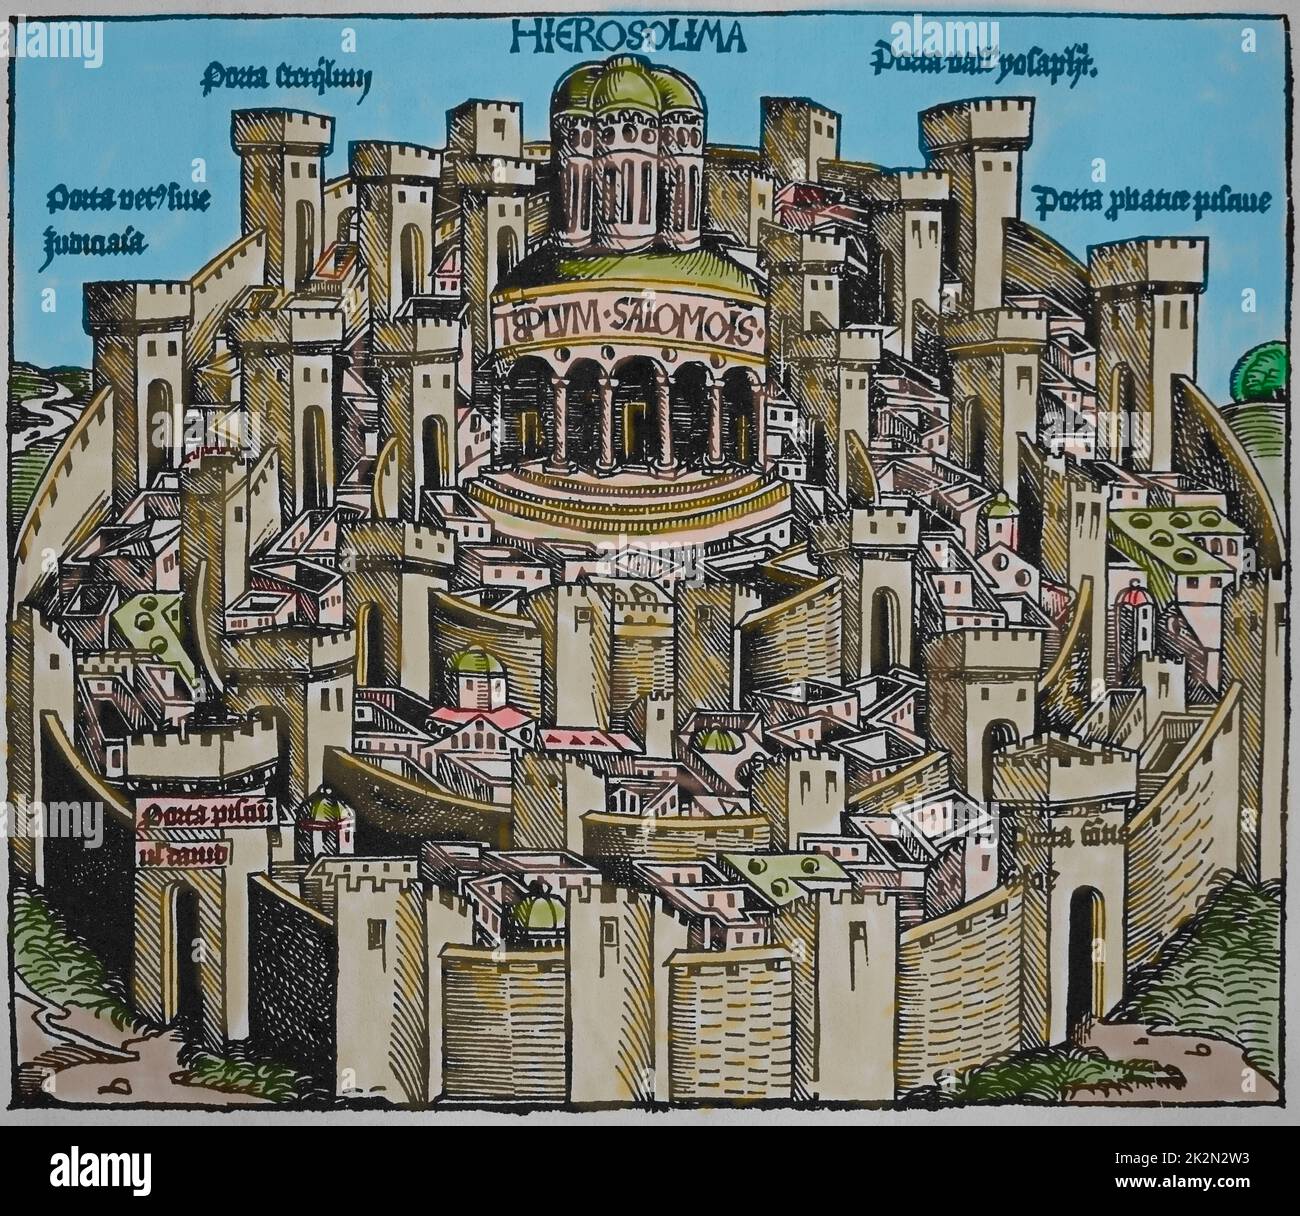 Medioevo. Terra Santa. Gerusalemme (Hierosolima). Le Cronache di Norimberga. 15th ° secolo. Foto Stock